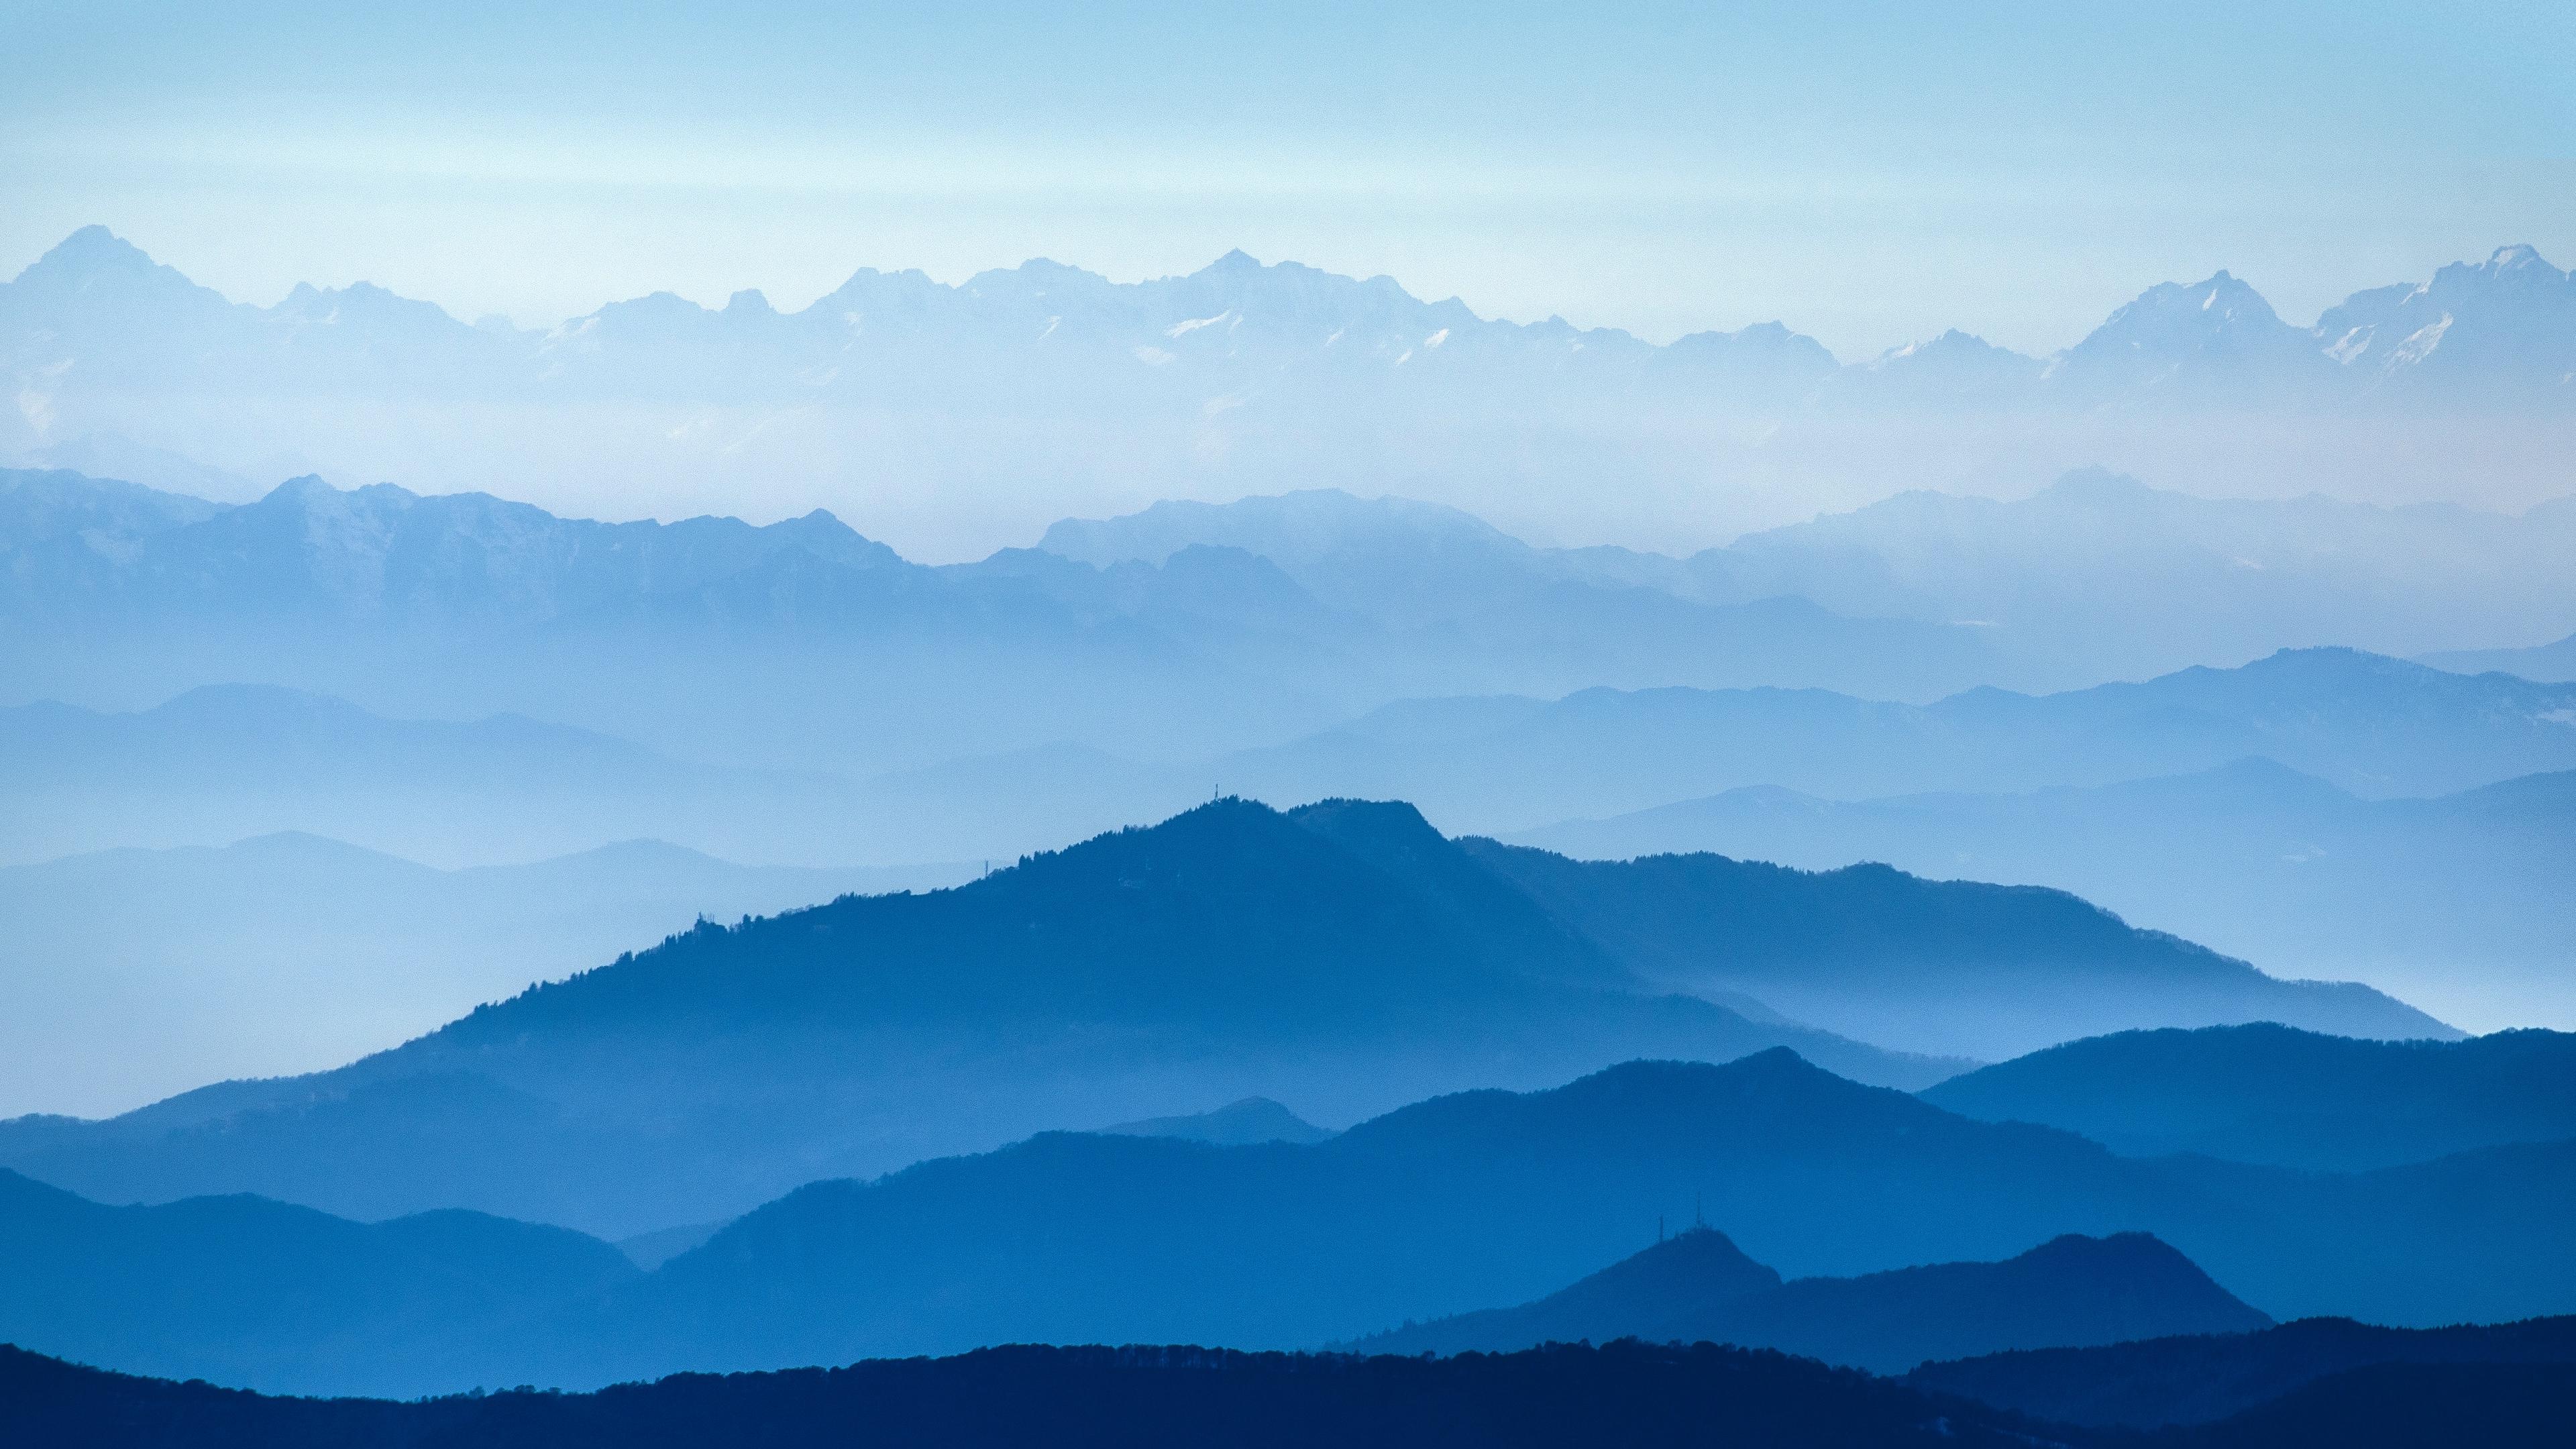 Download wallpaper 3840x2160 mountains, fog, sky, blue, white 4k uhd 16:9 HD background